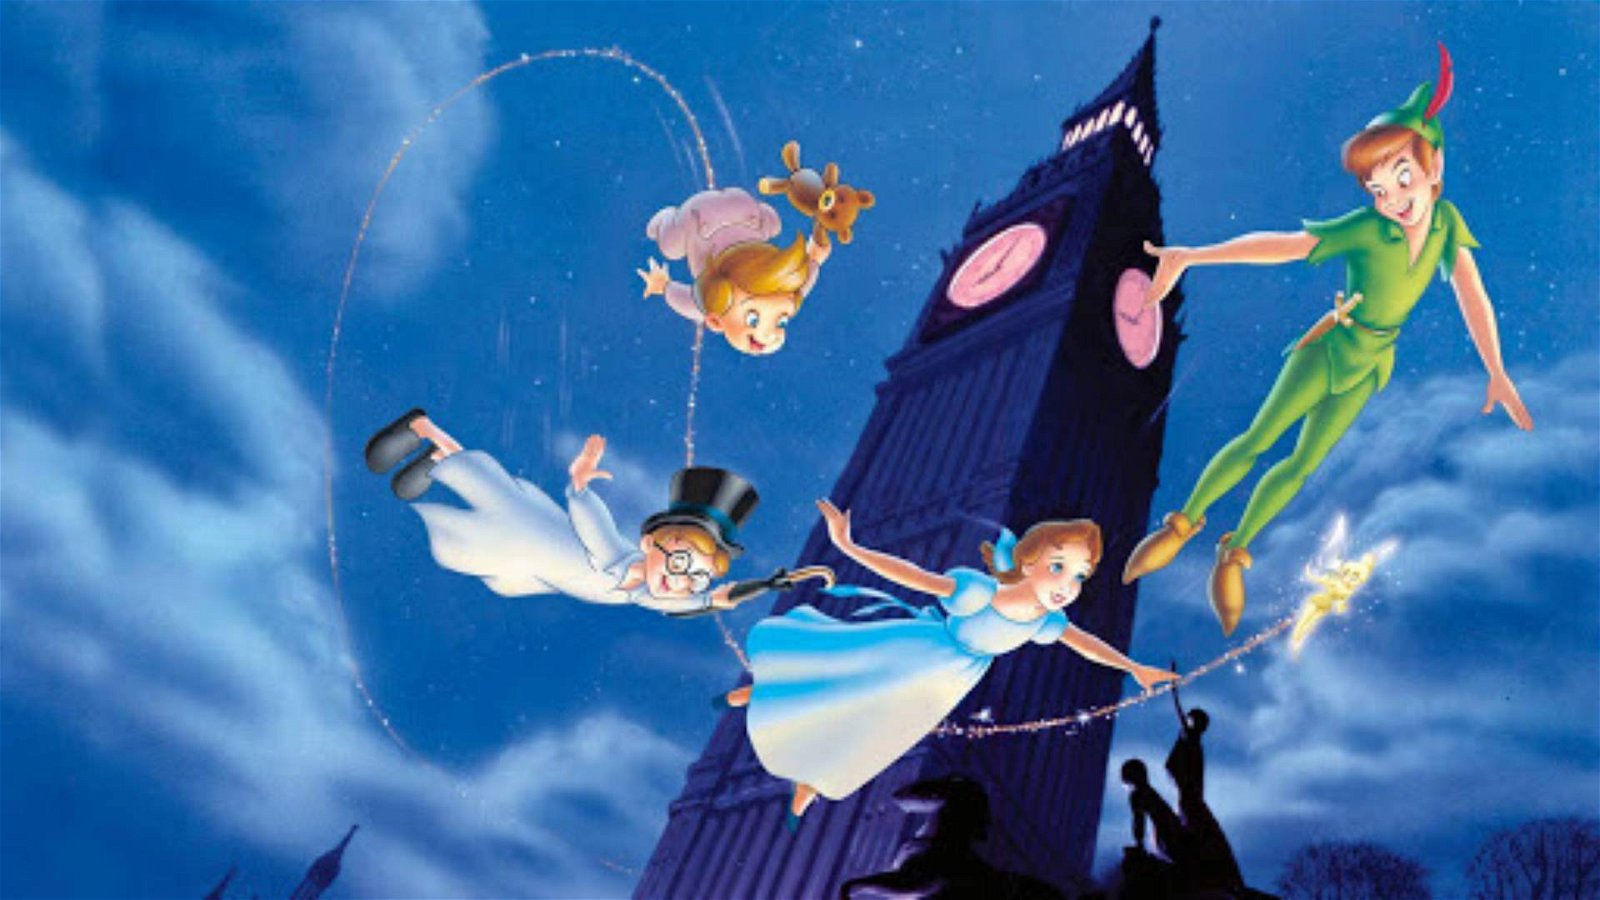 Immagine di Peter Pan and Wendy: scelti i due protagonisti del live-action Disney